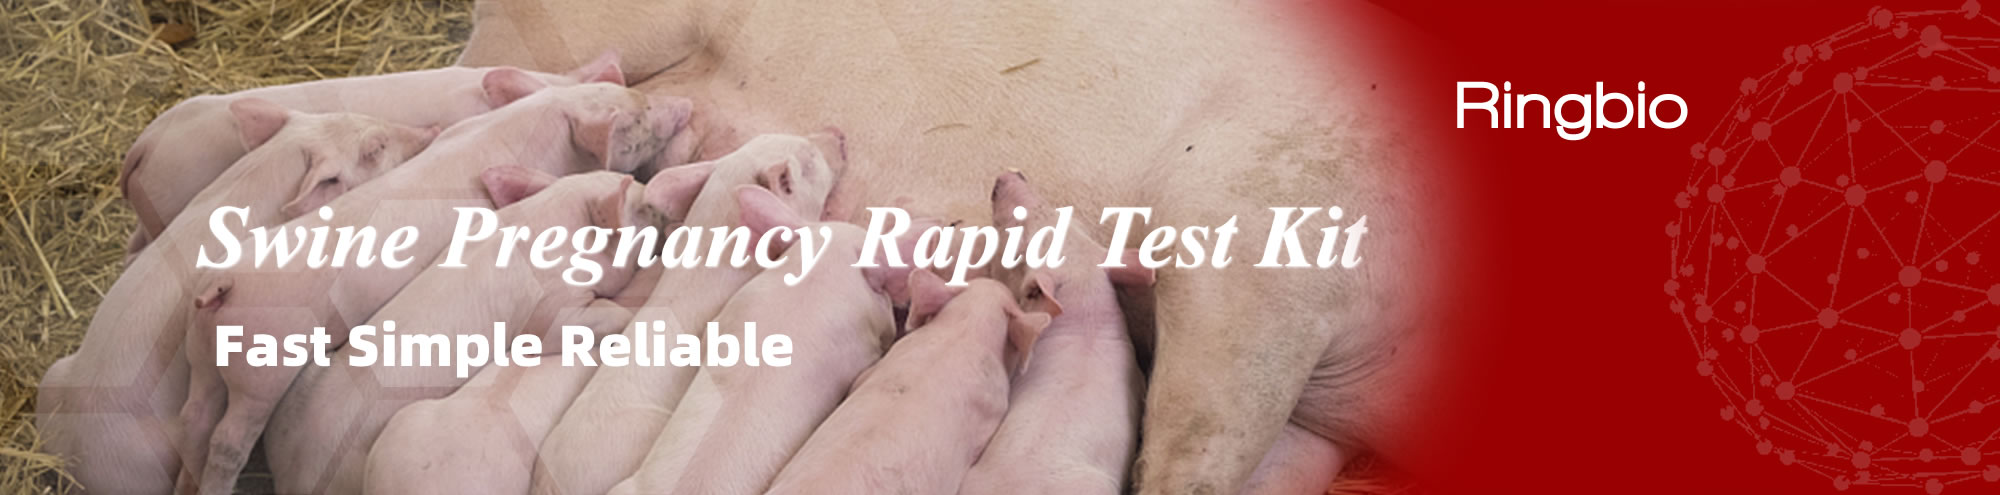 Ringbioの豚妊娠迅速検査キット、豚の妊娠を10分で検出